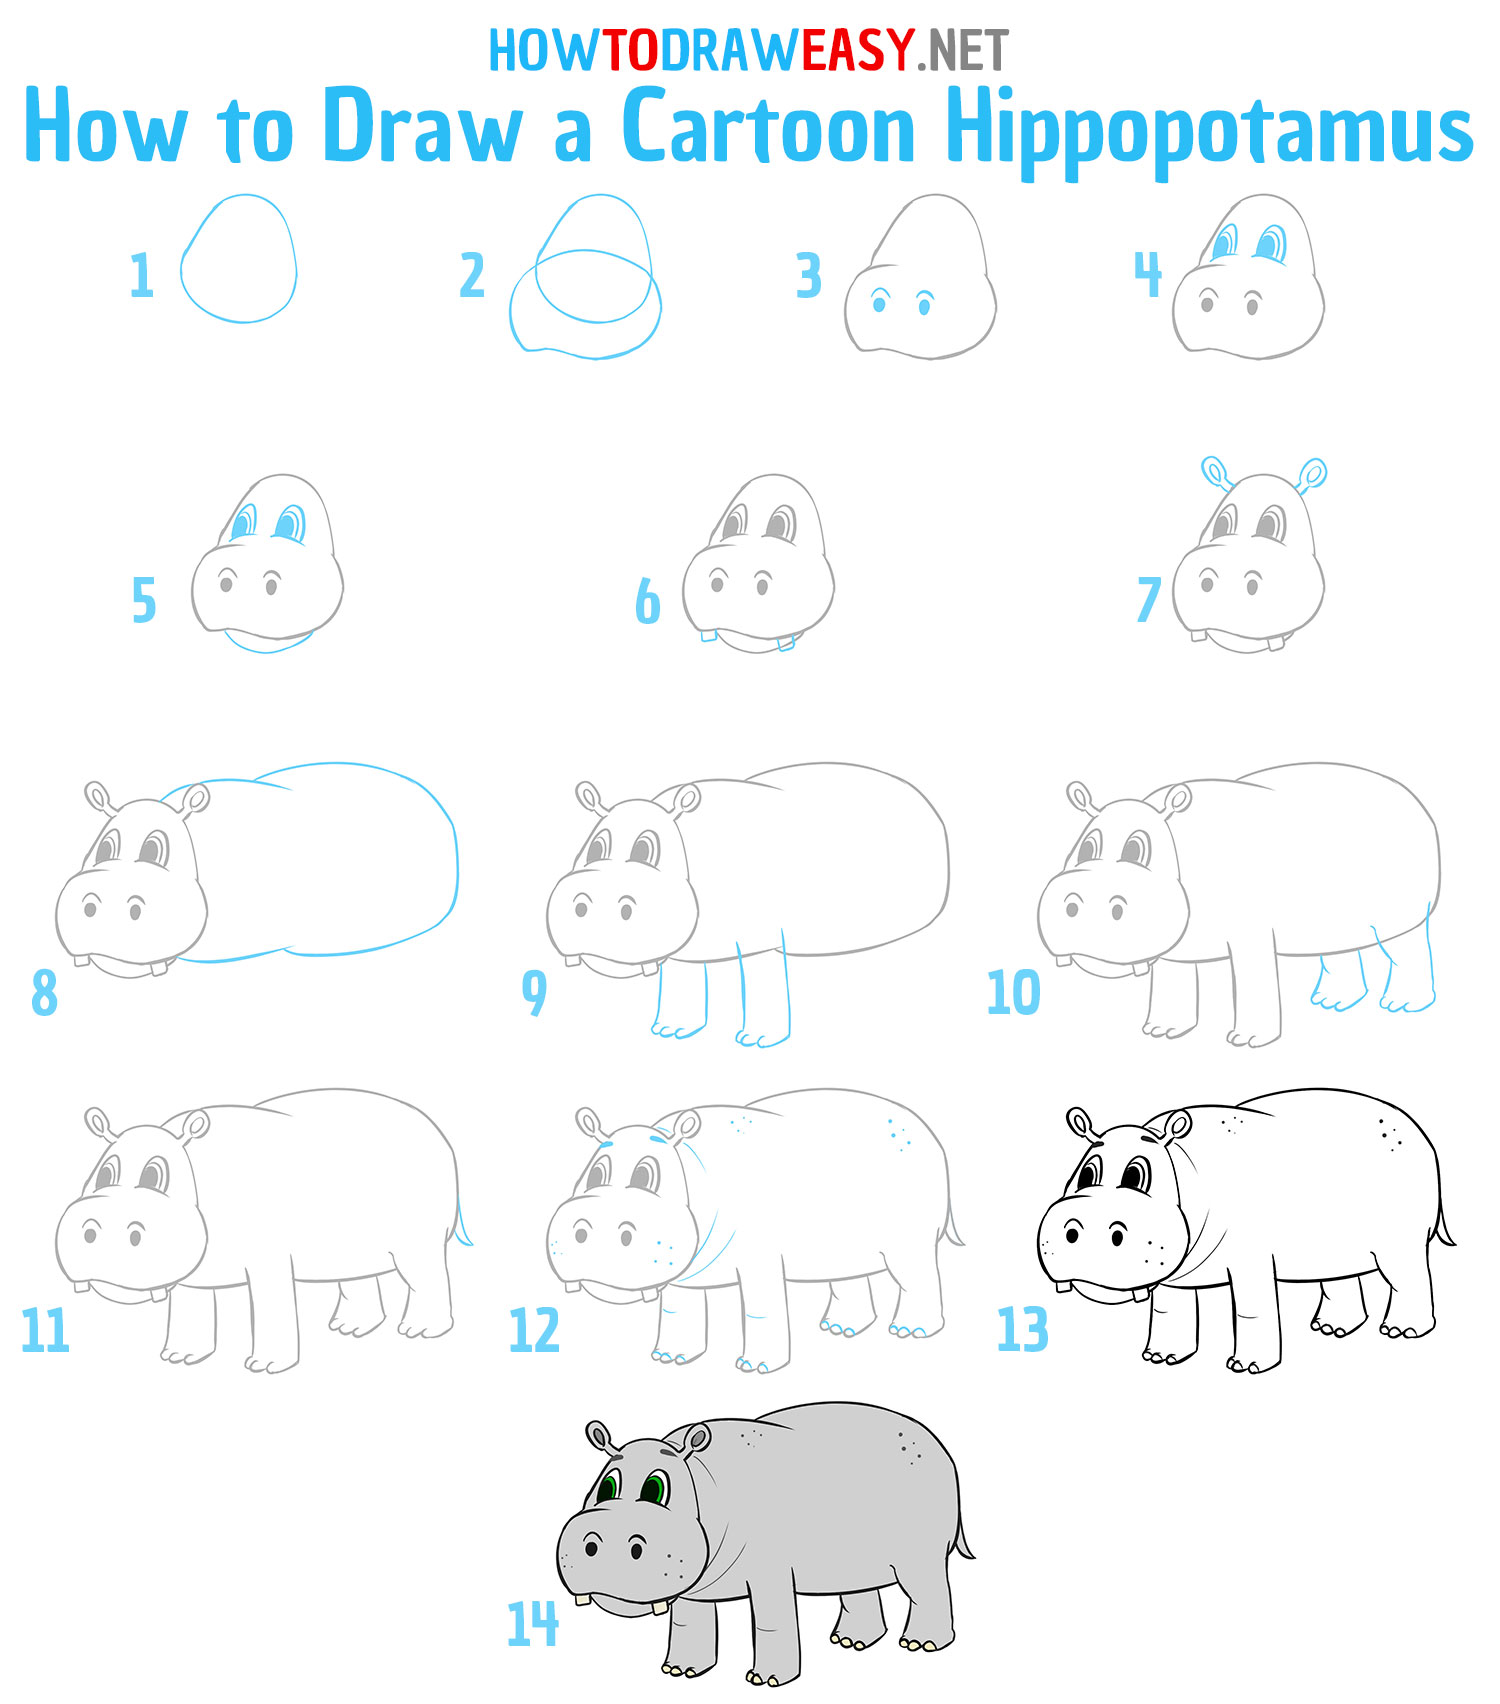 How to Draw a Cartoon Hippopotamus Step by Step